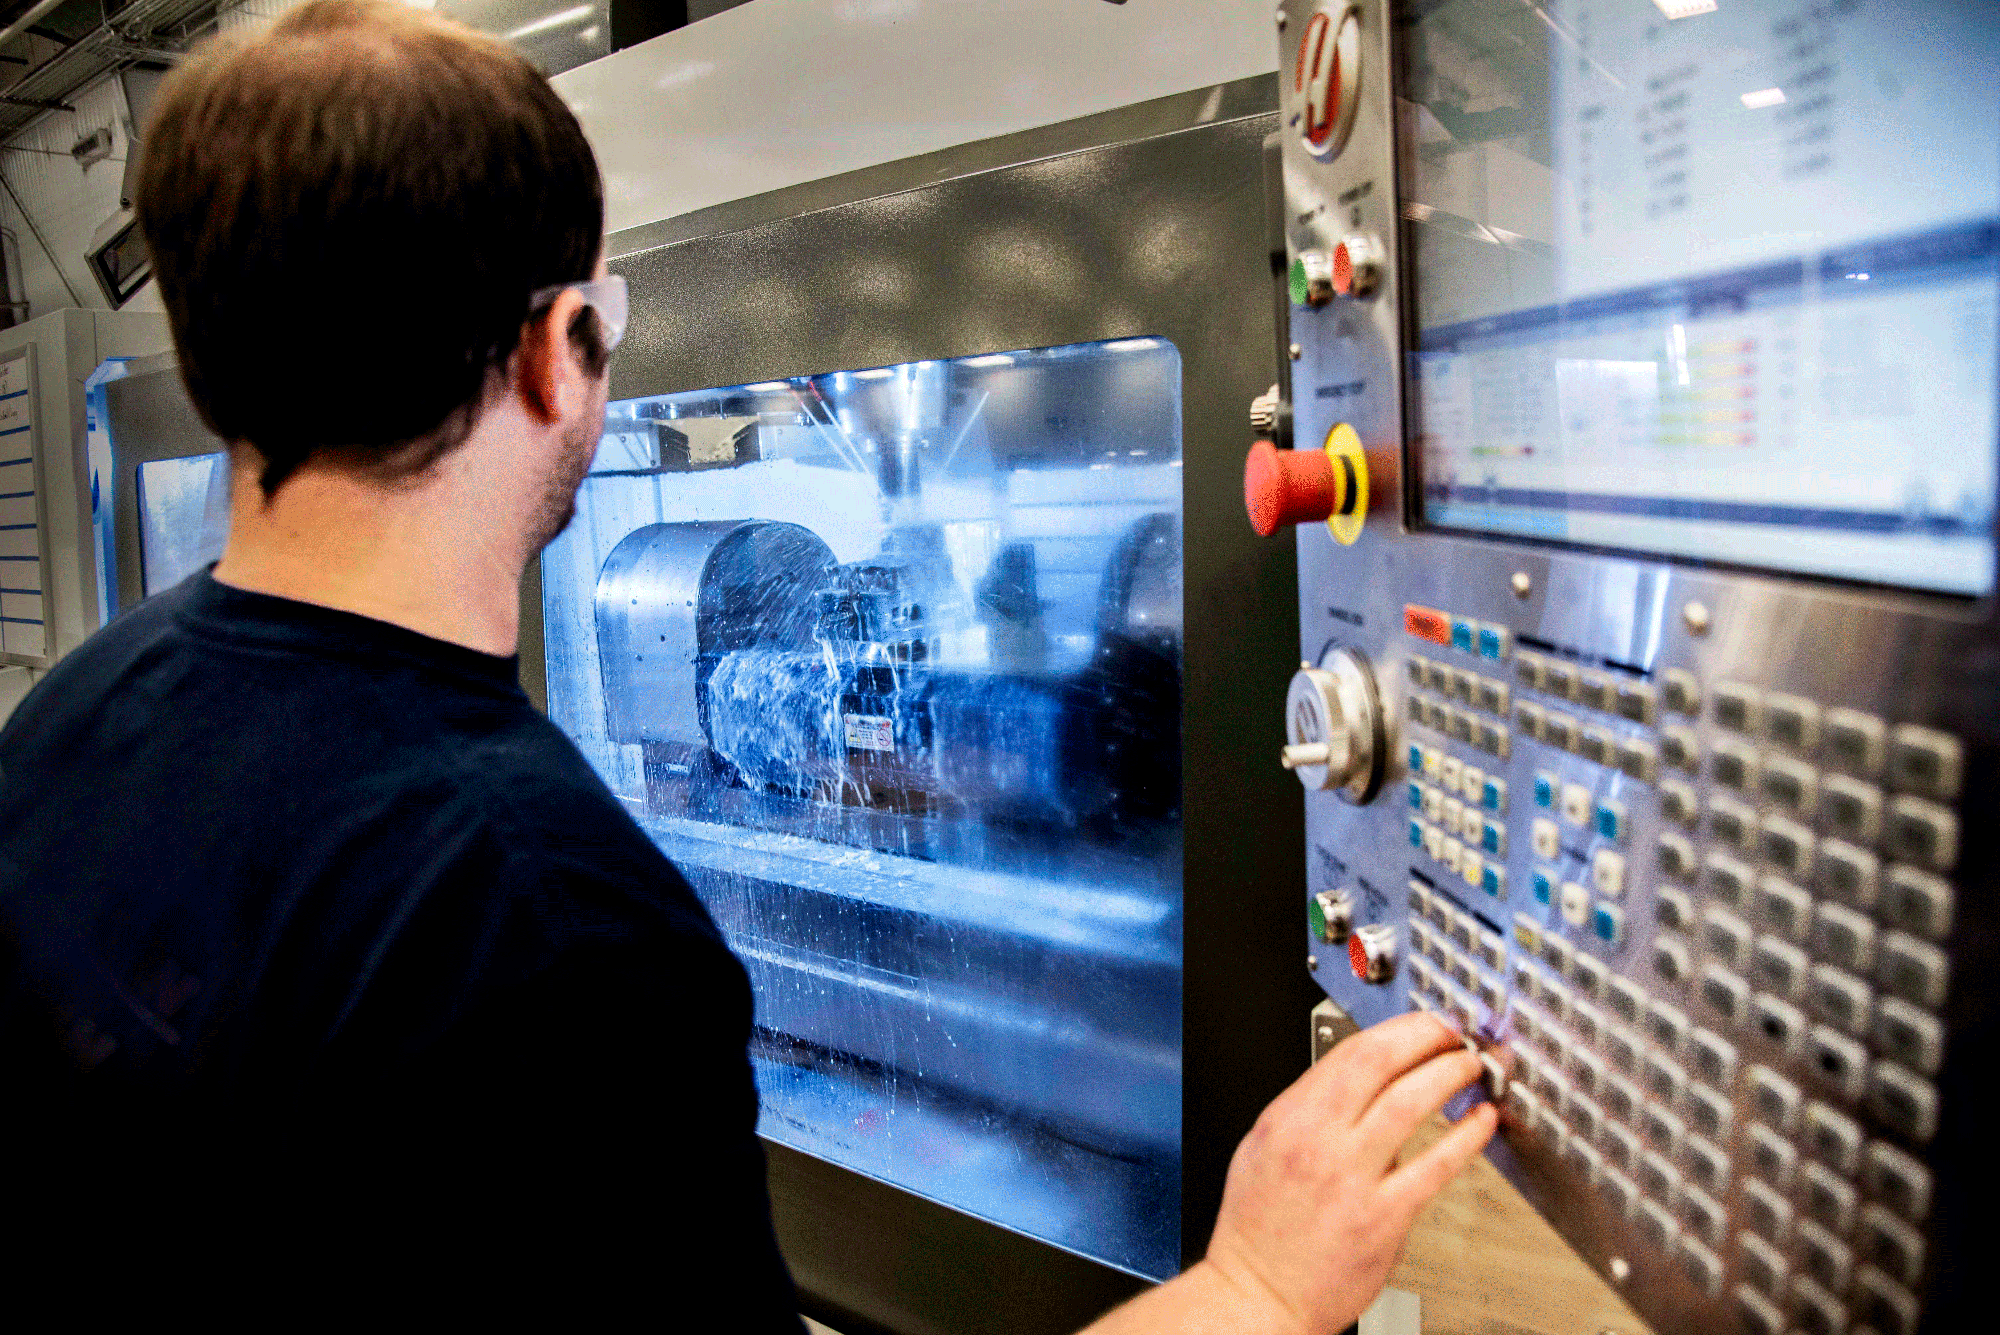 a man uses a control panel to adjust a machine